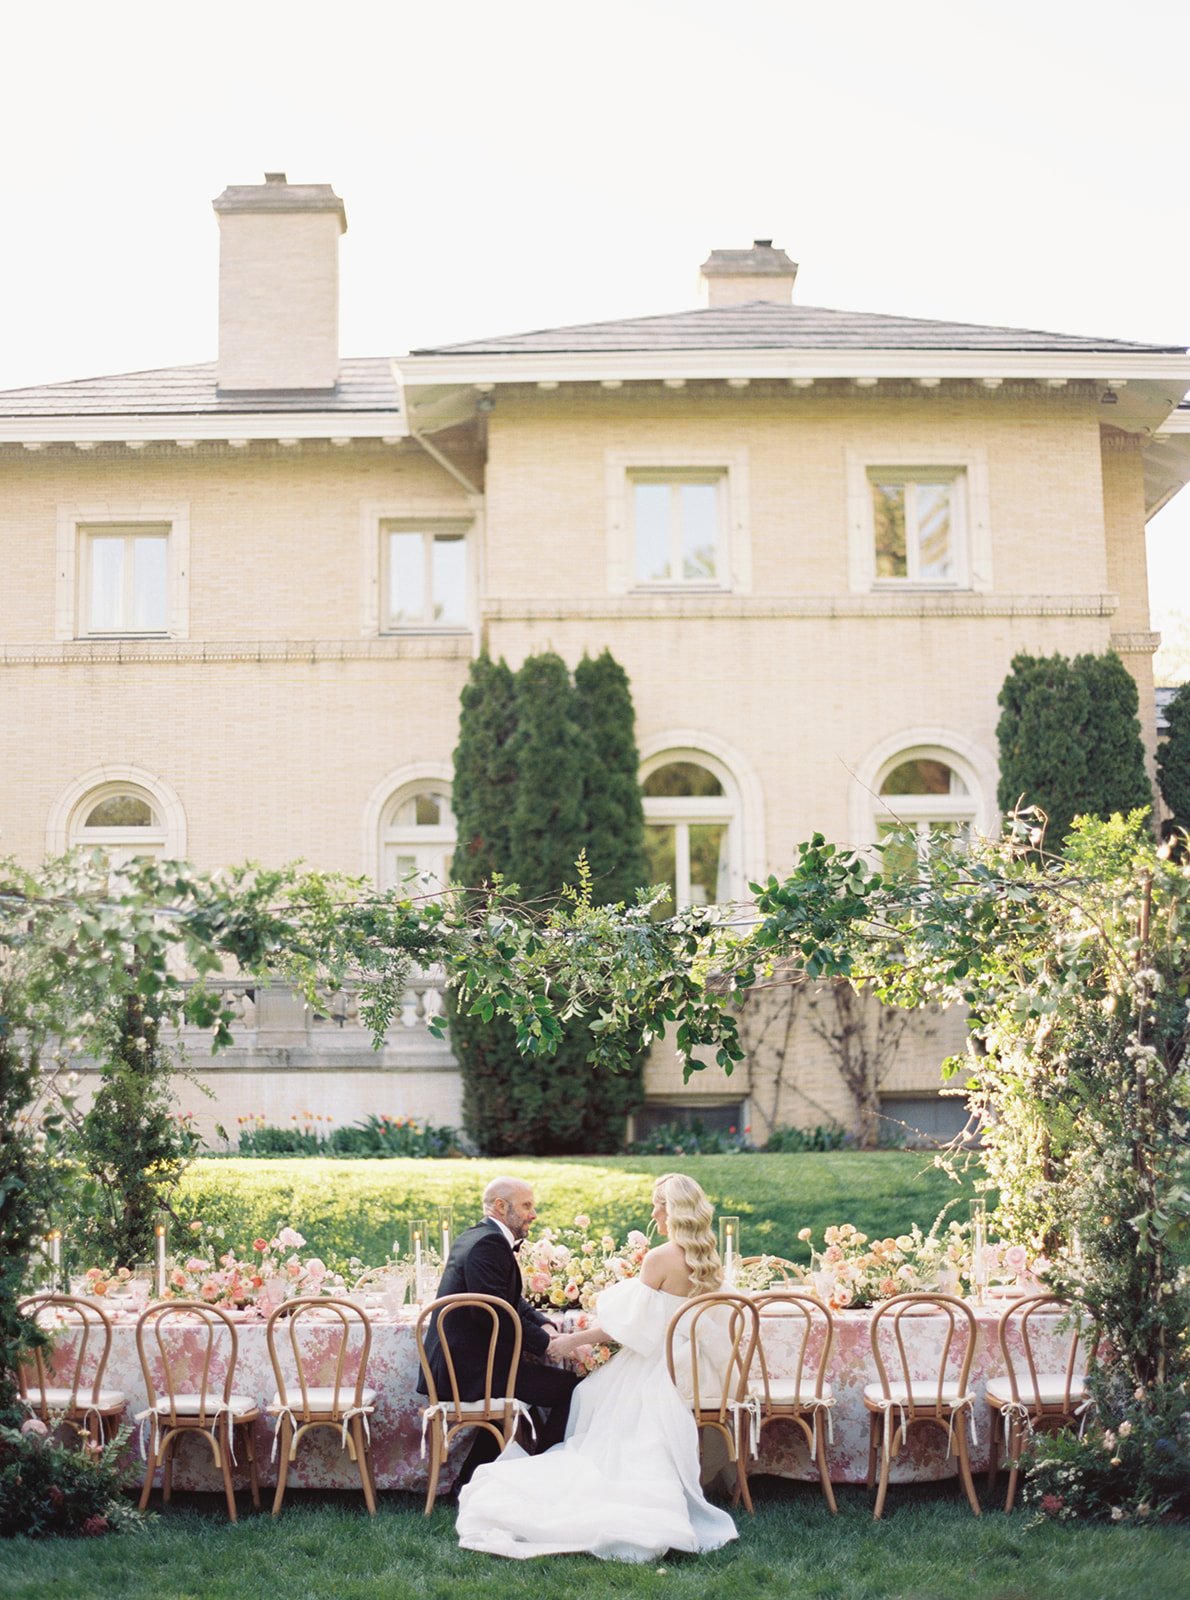 Timeless garden and vineyard wedding reception inspo in New England